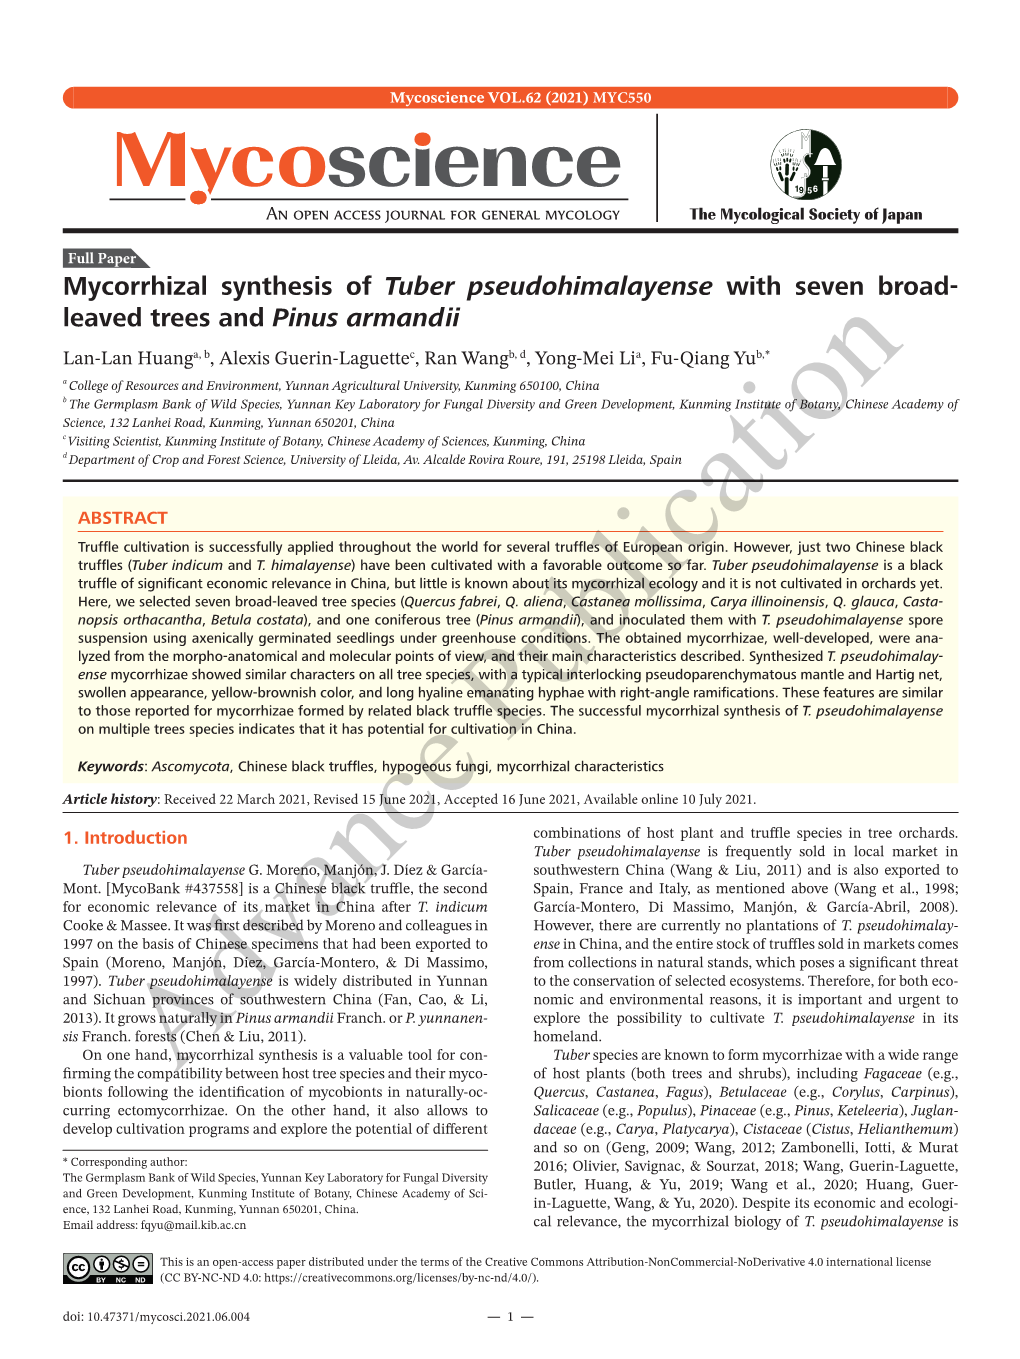 Mycorrhizal Synthesis of Tuber Pseudohimalayense with Seven Broad